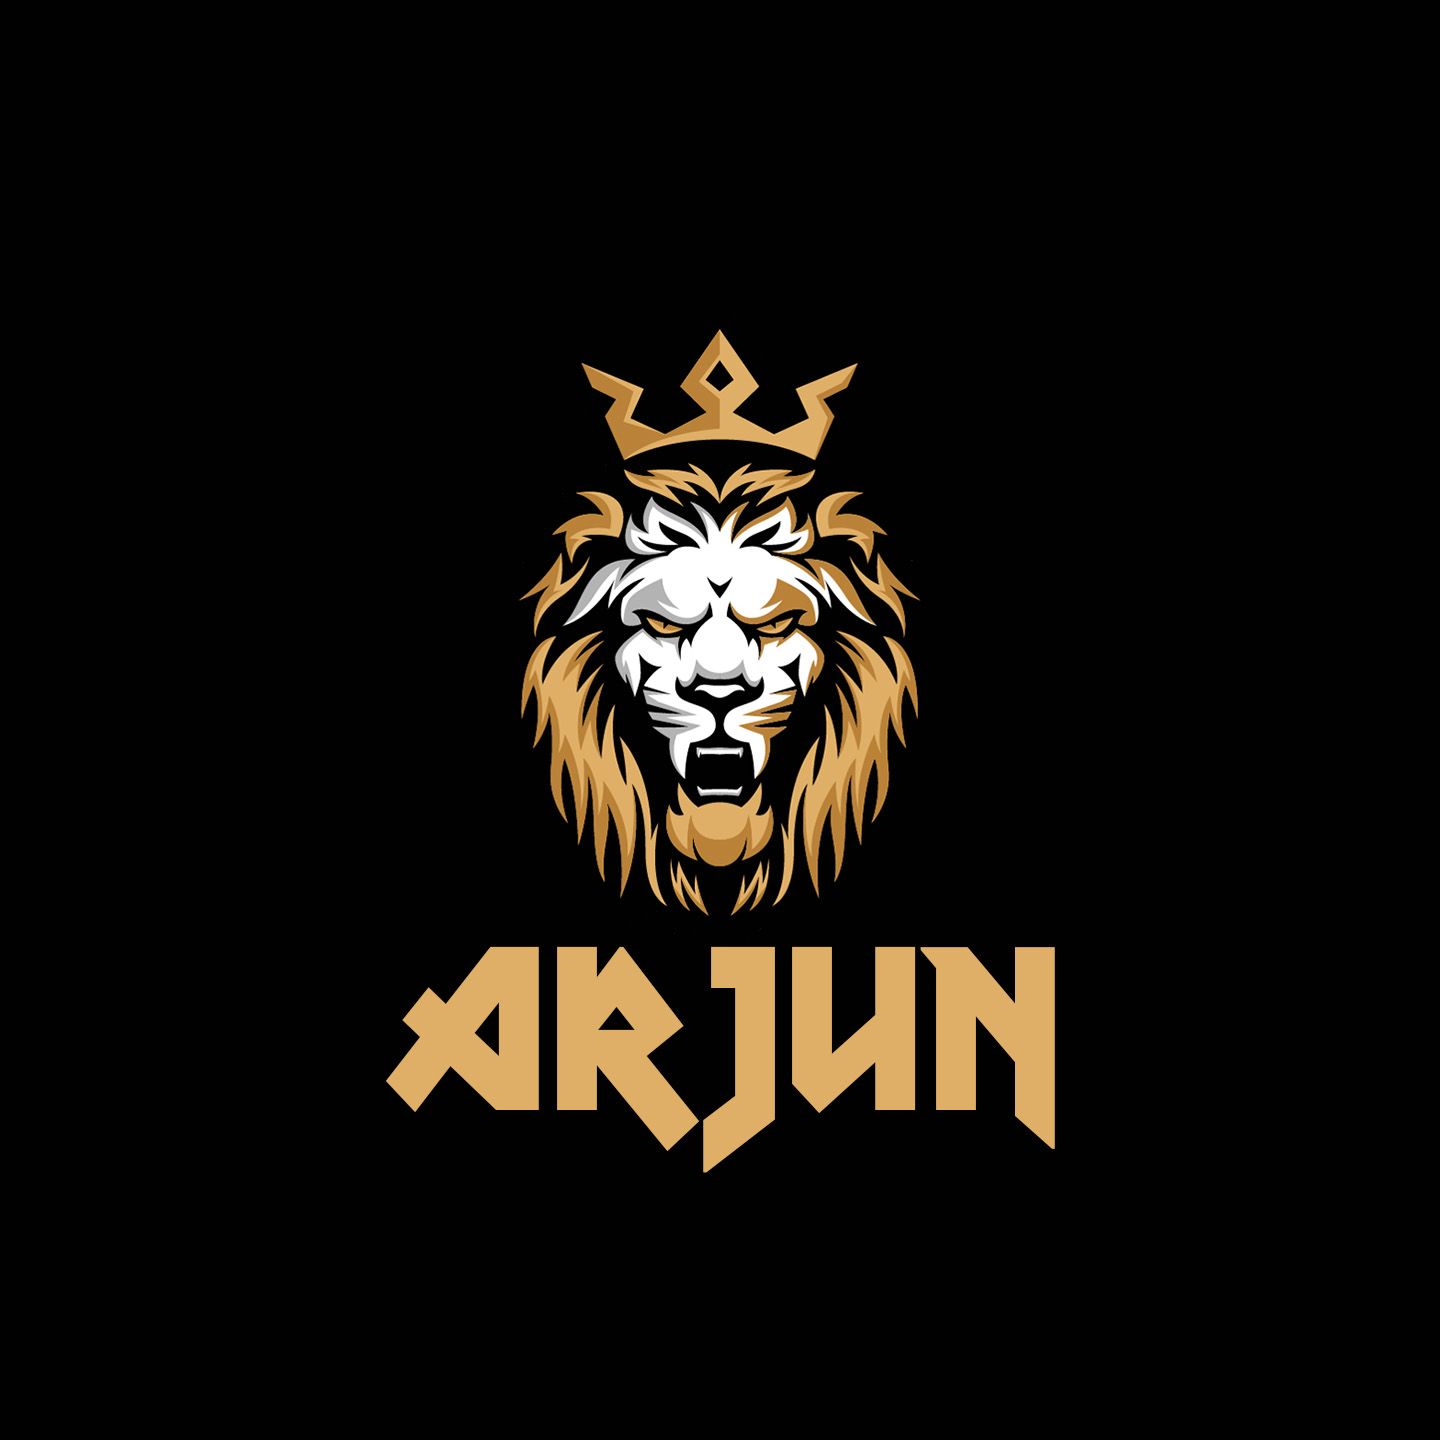 Arjun's Logo by Hitesh Malviya on Dribbble